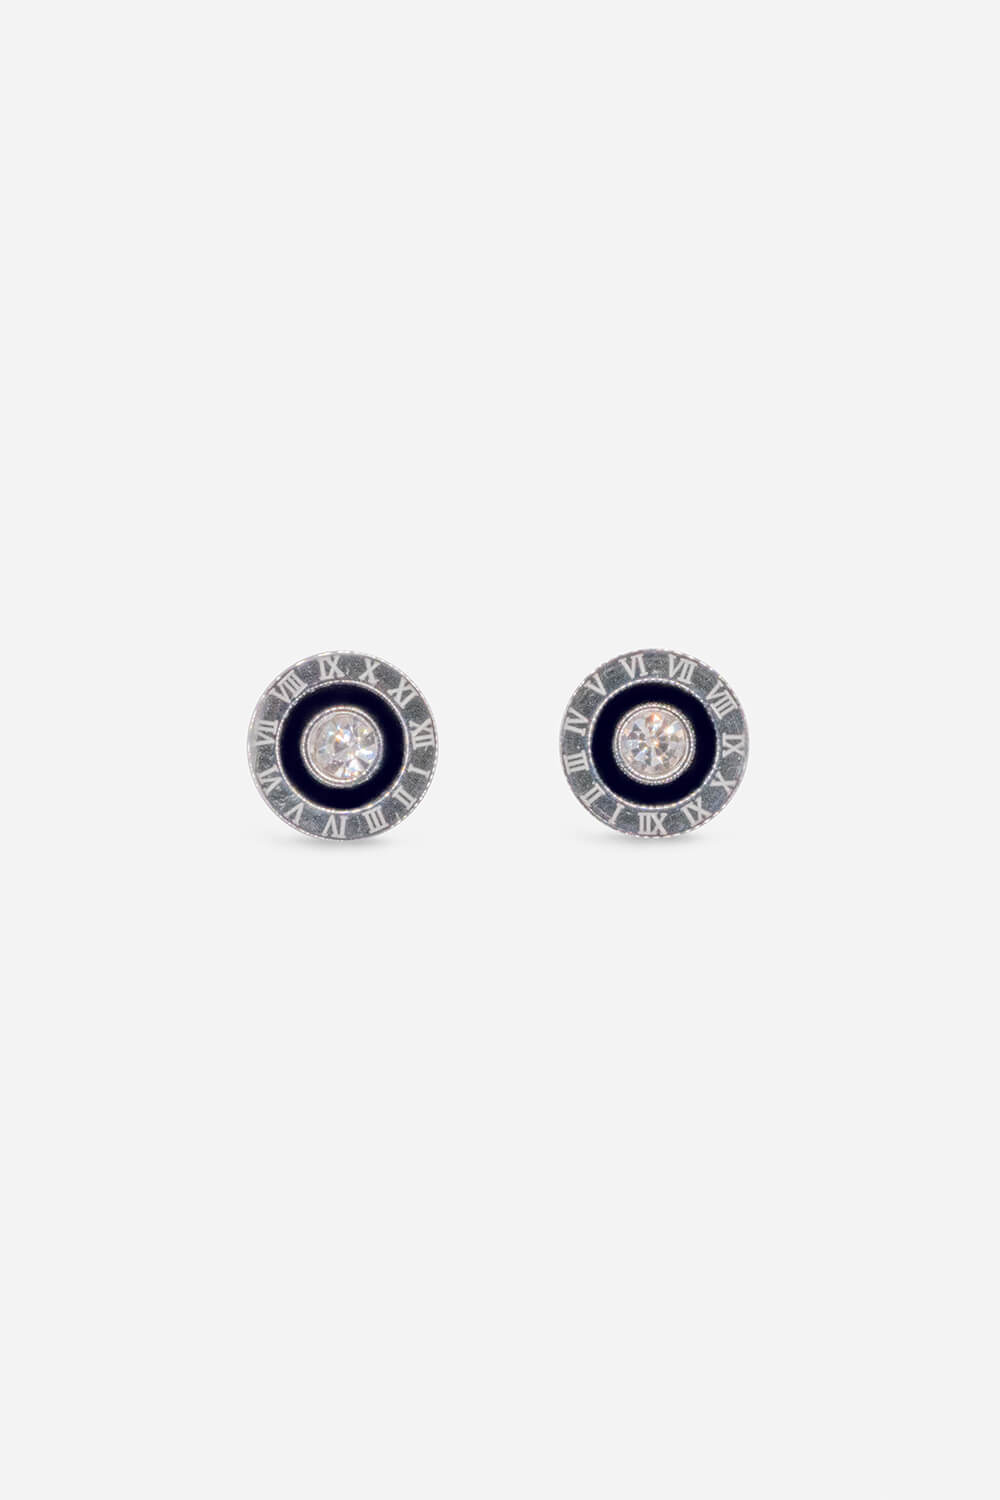 Silver Stainless Steel Diamante Clock Earrings, Image 2 of 2